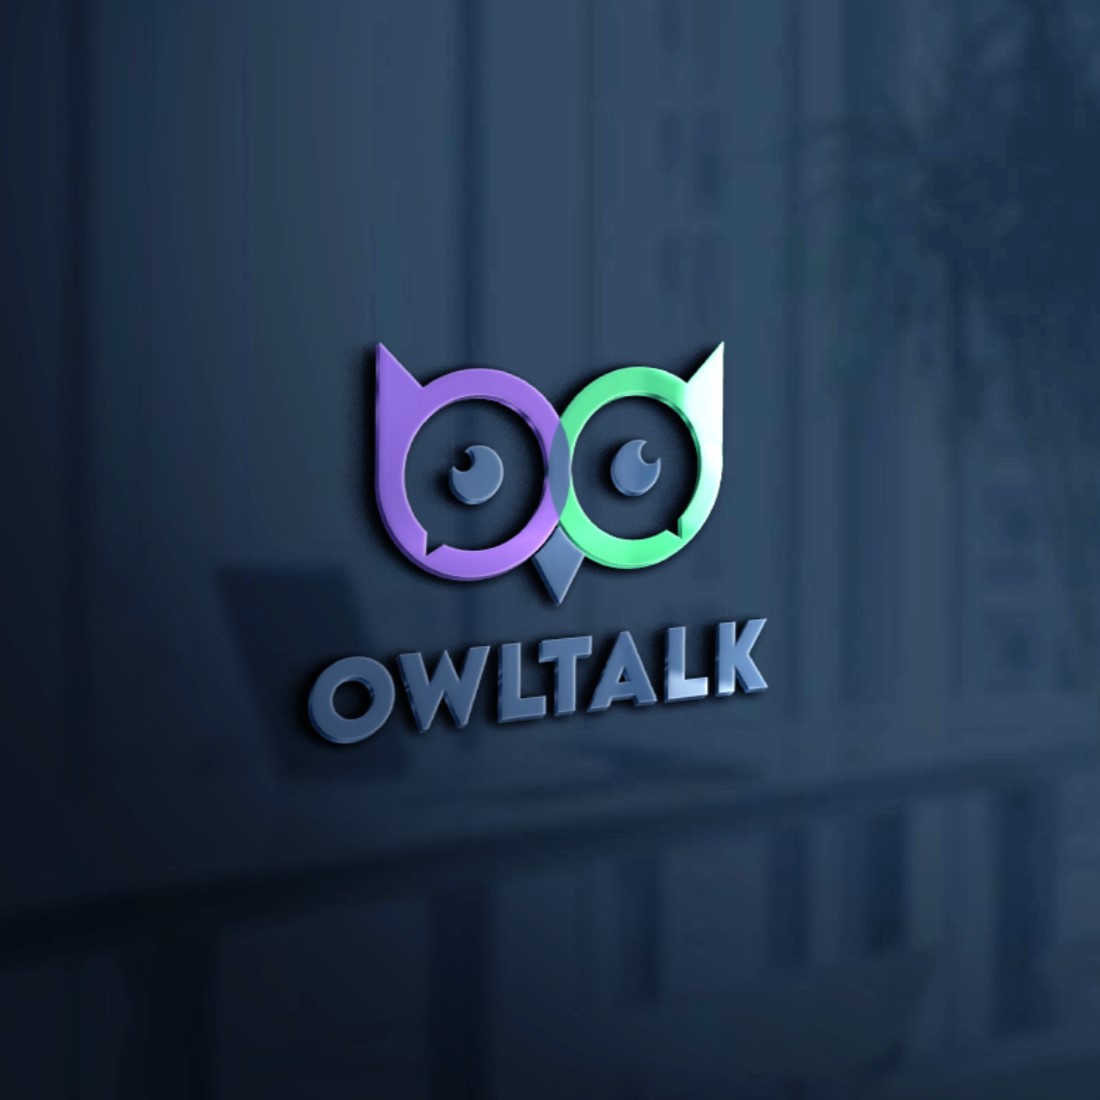 Modern Owl Talk Logo cover image.